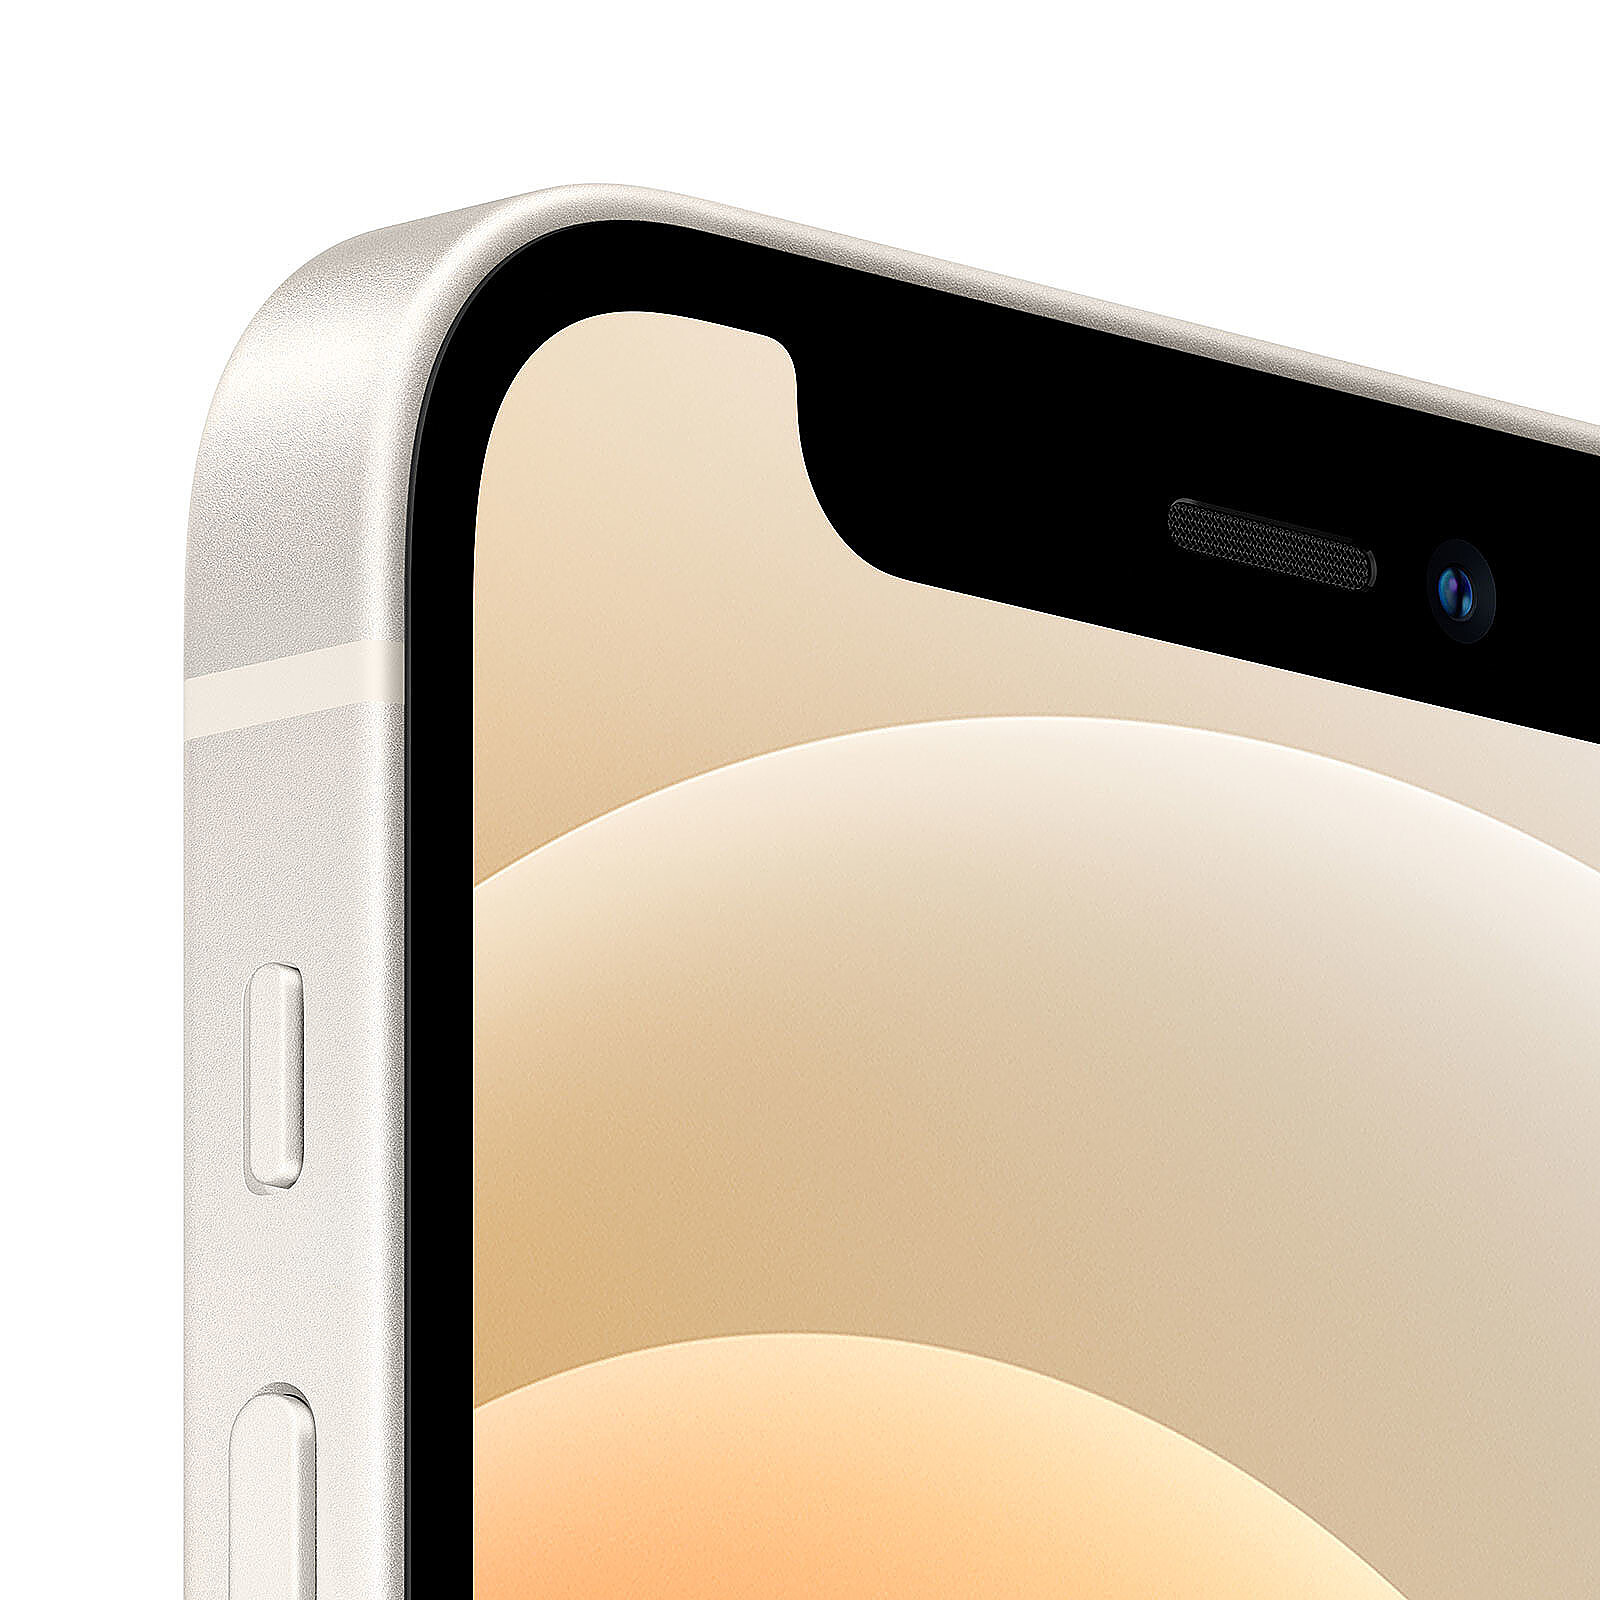 Apple iPhone 12 mini 64 Go Bleu (MGE13F/A) · Reconditionné - Smartphone  reconditionné - LDLC